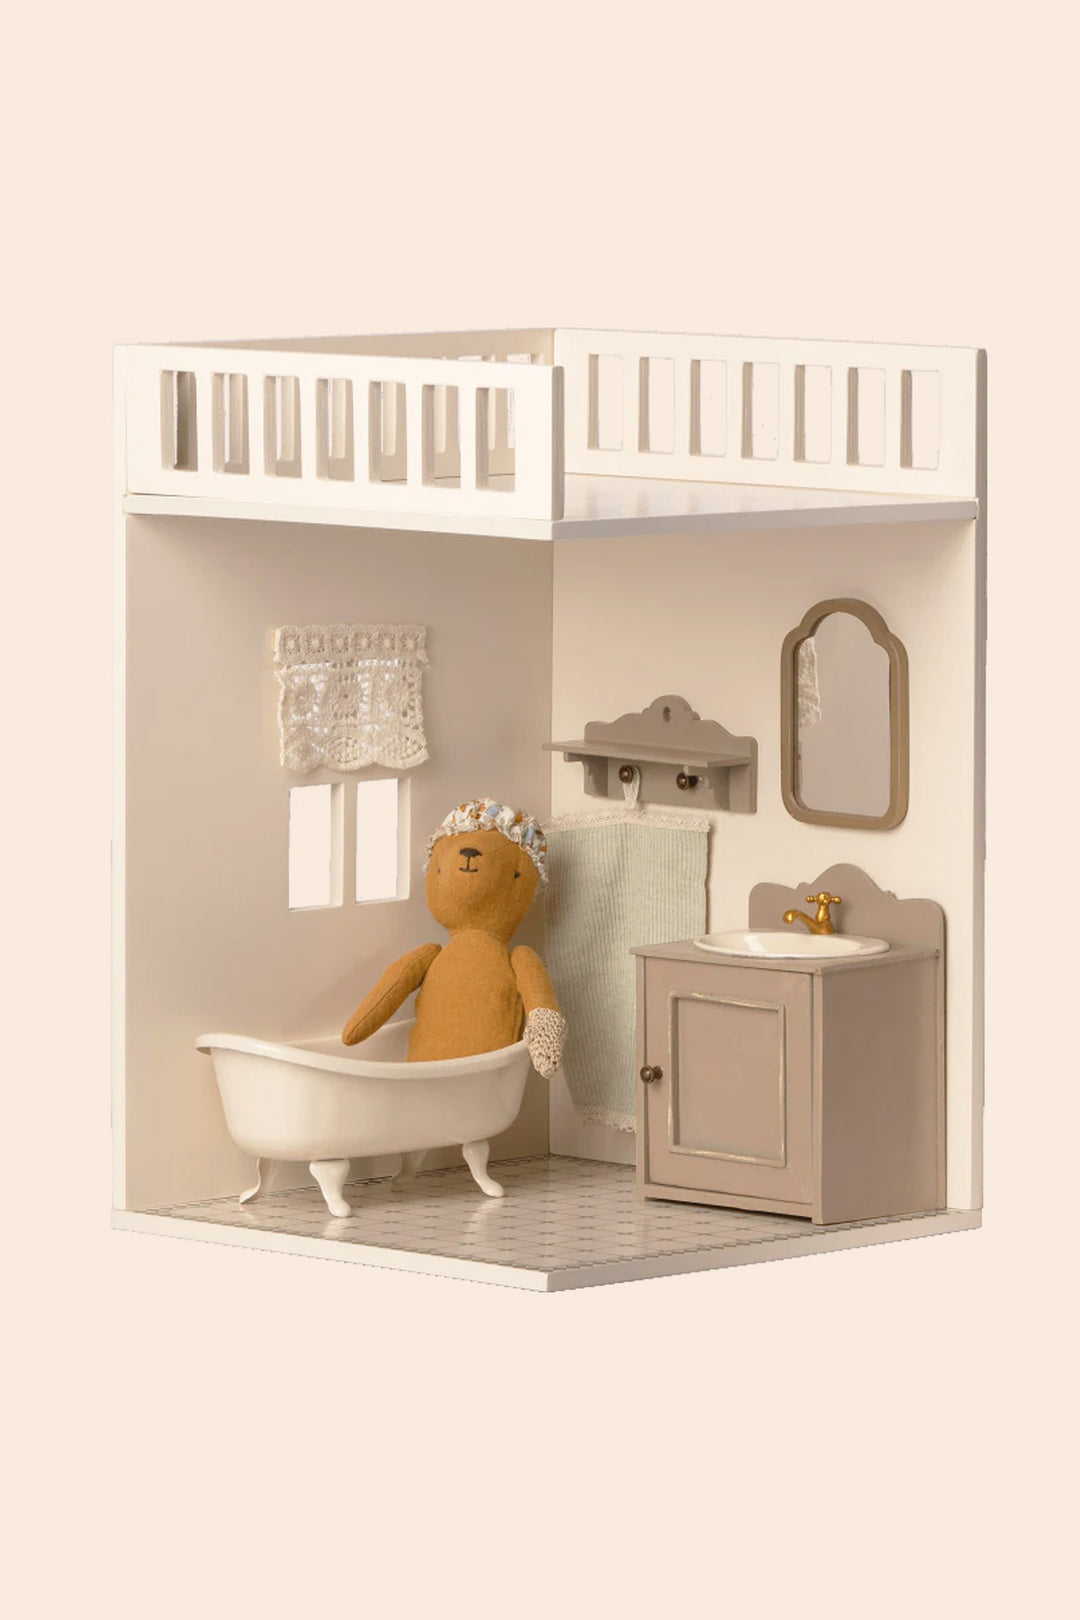 Maileg House Miniature Bathroom